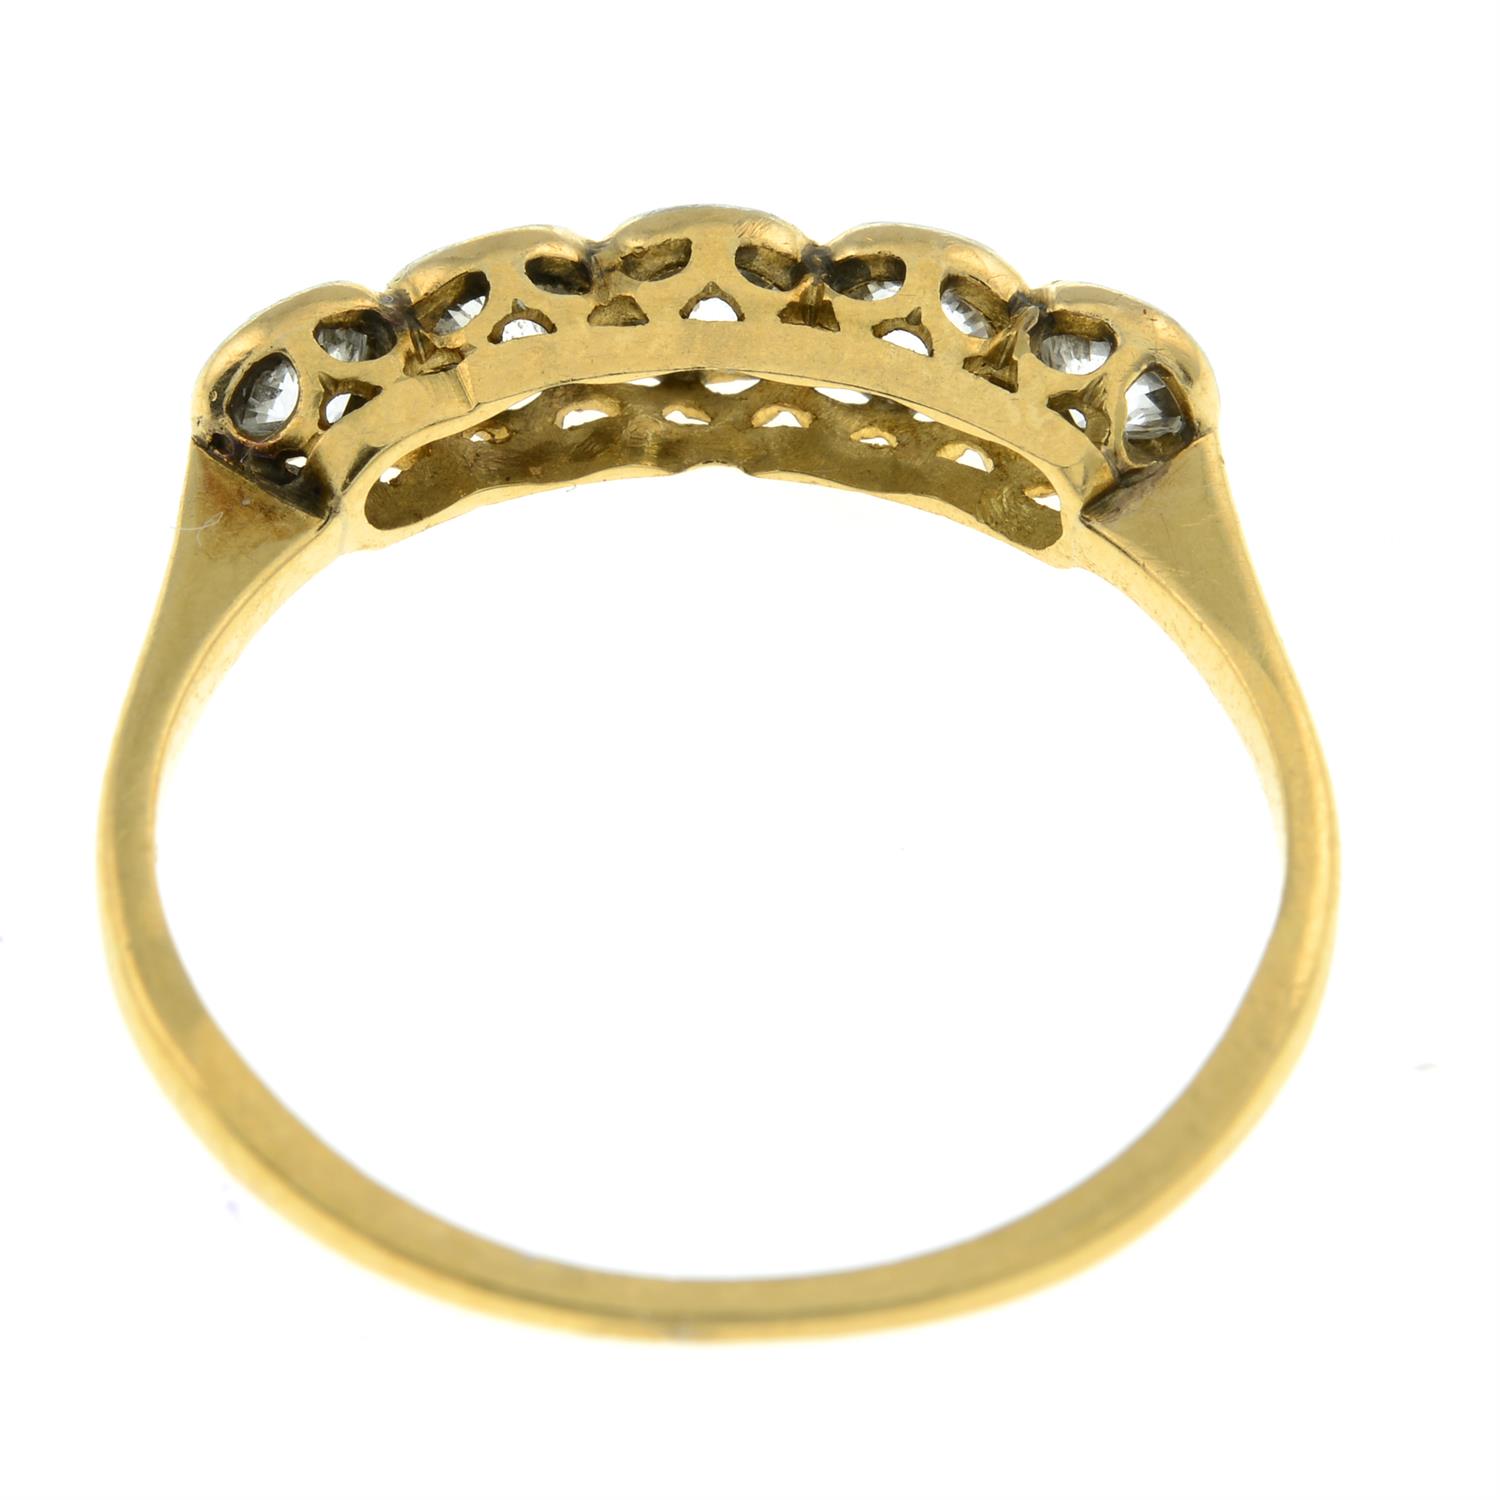 Early 20th century diamond ring - Image 2 of 2